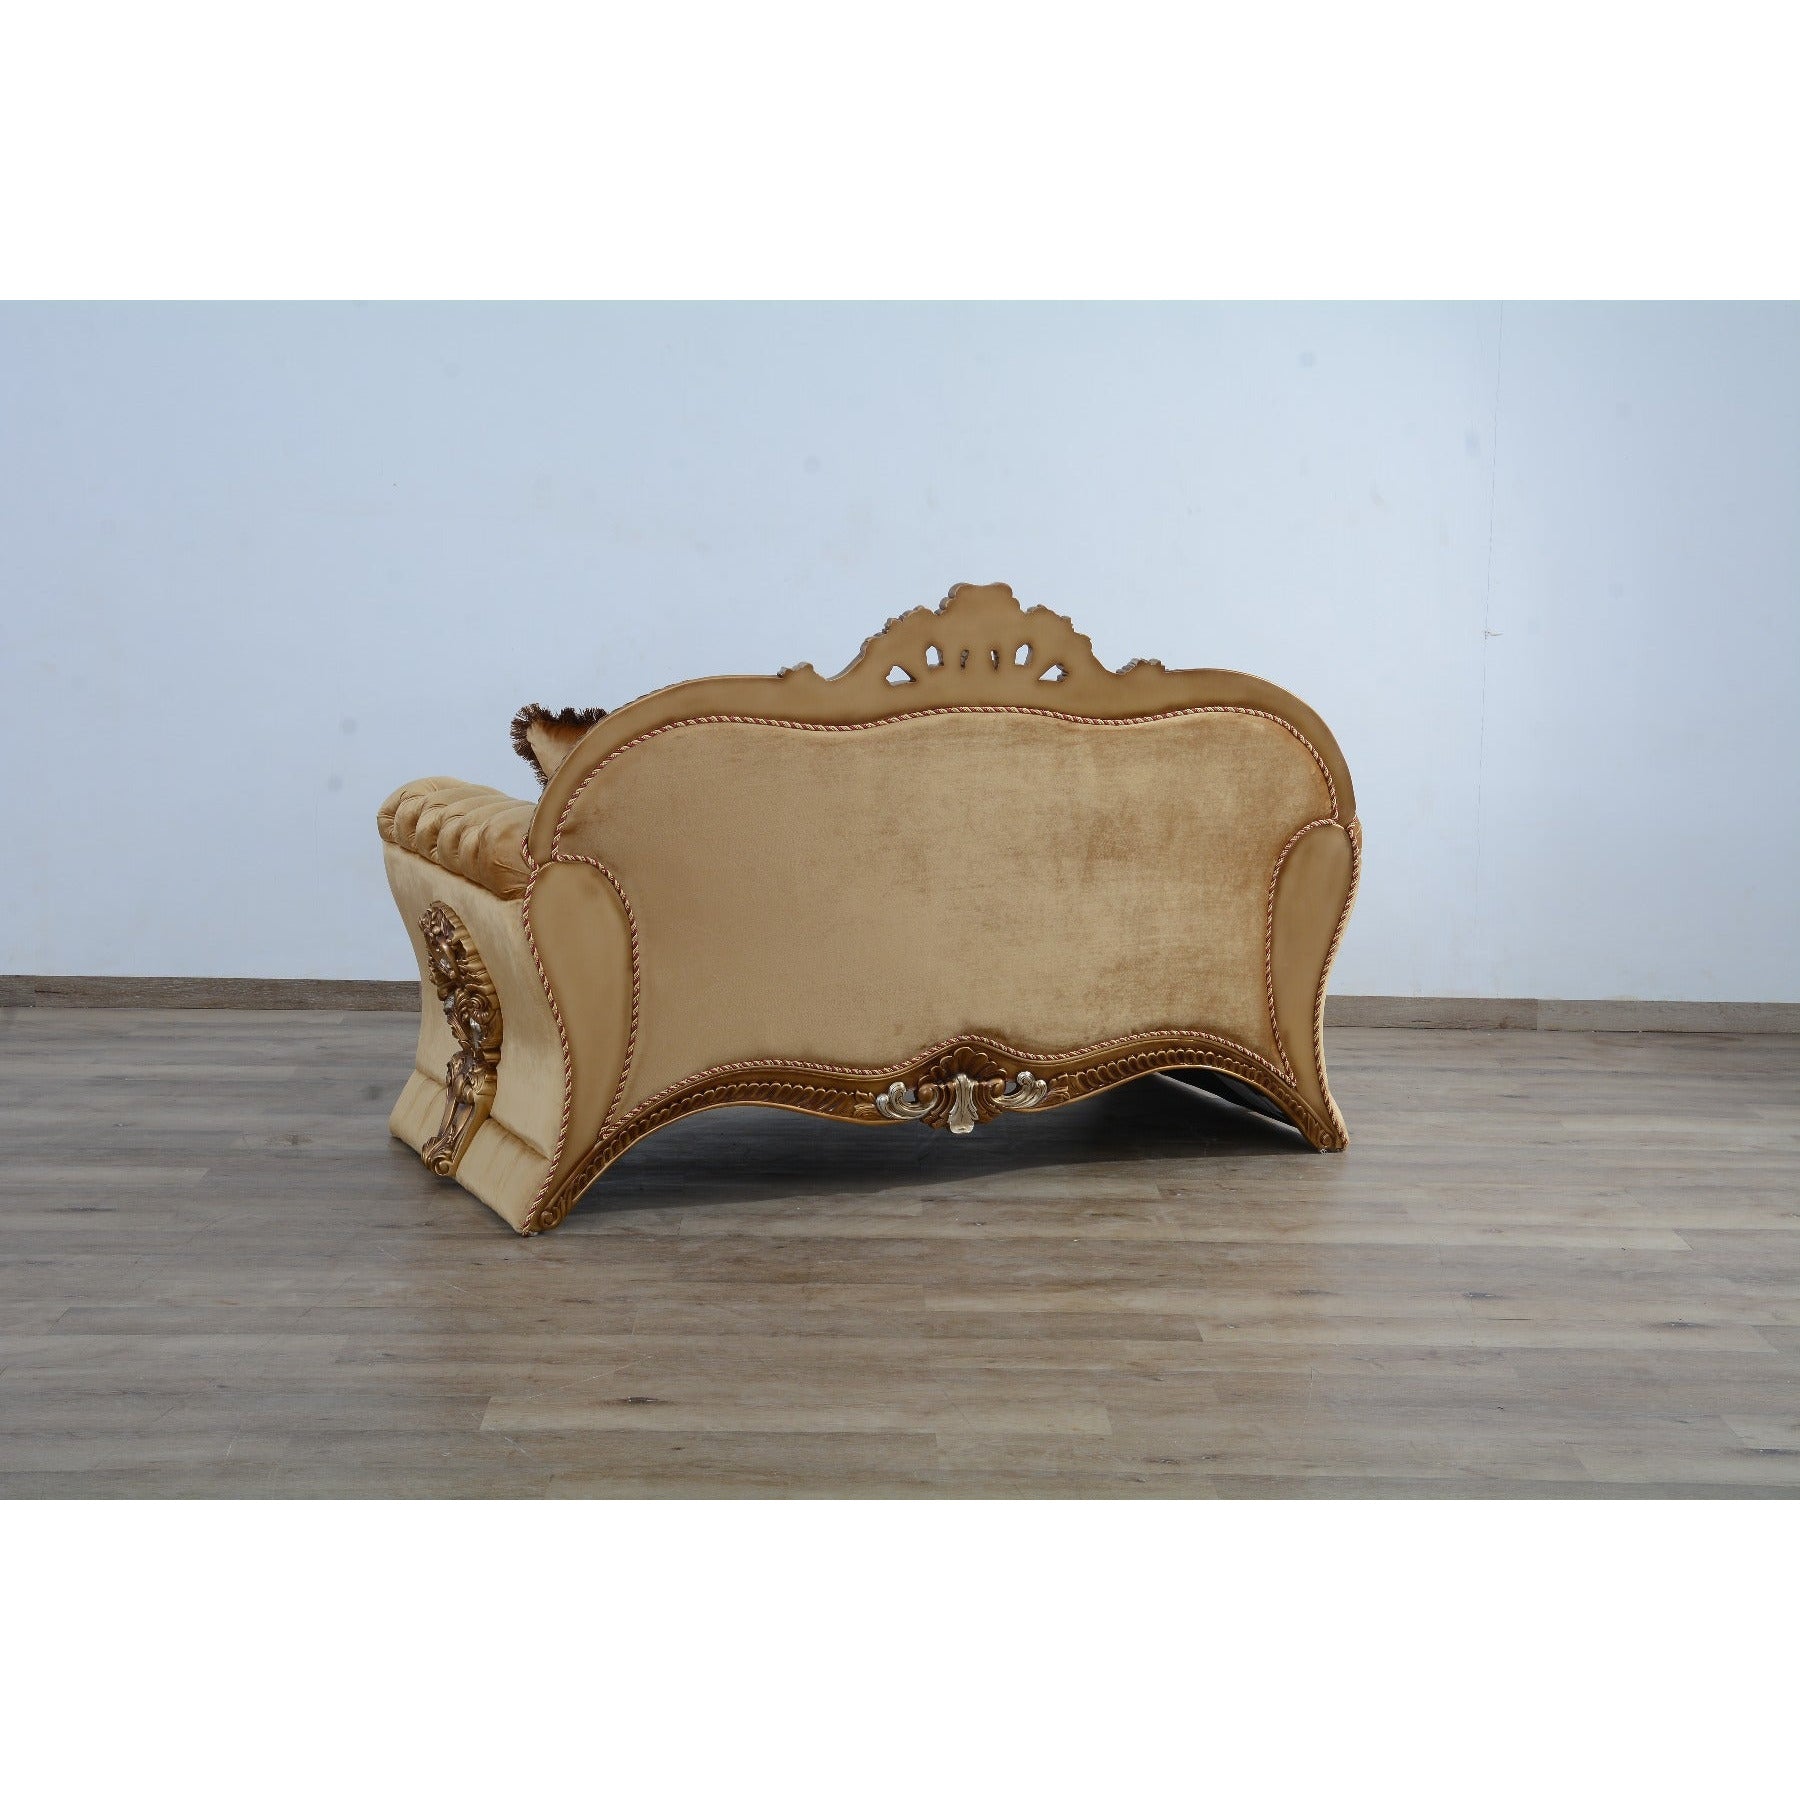 European Furniture - Emperador III Loveseat in Red Gold - 42036-L - New Star Living